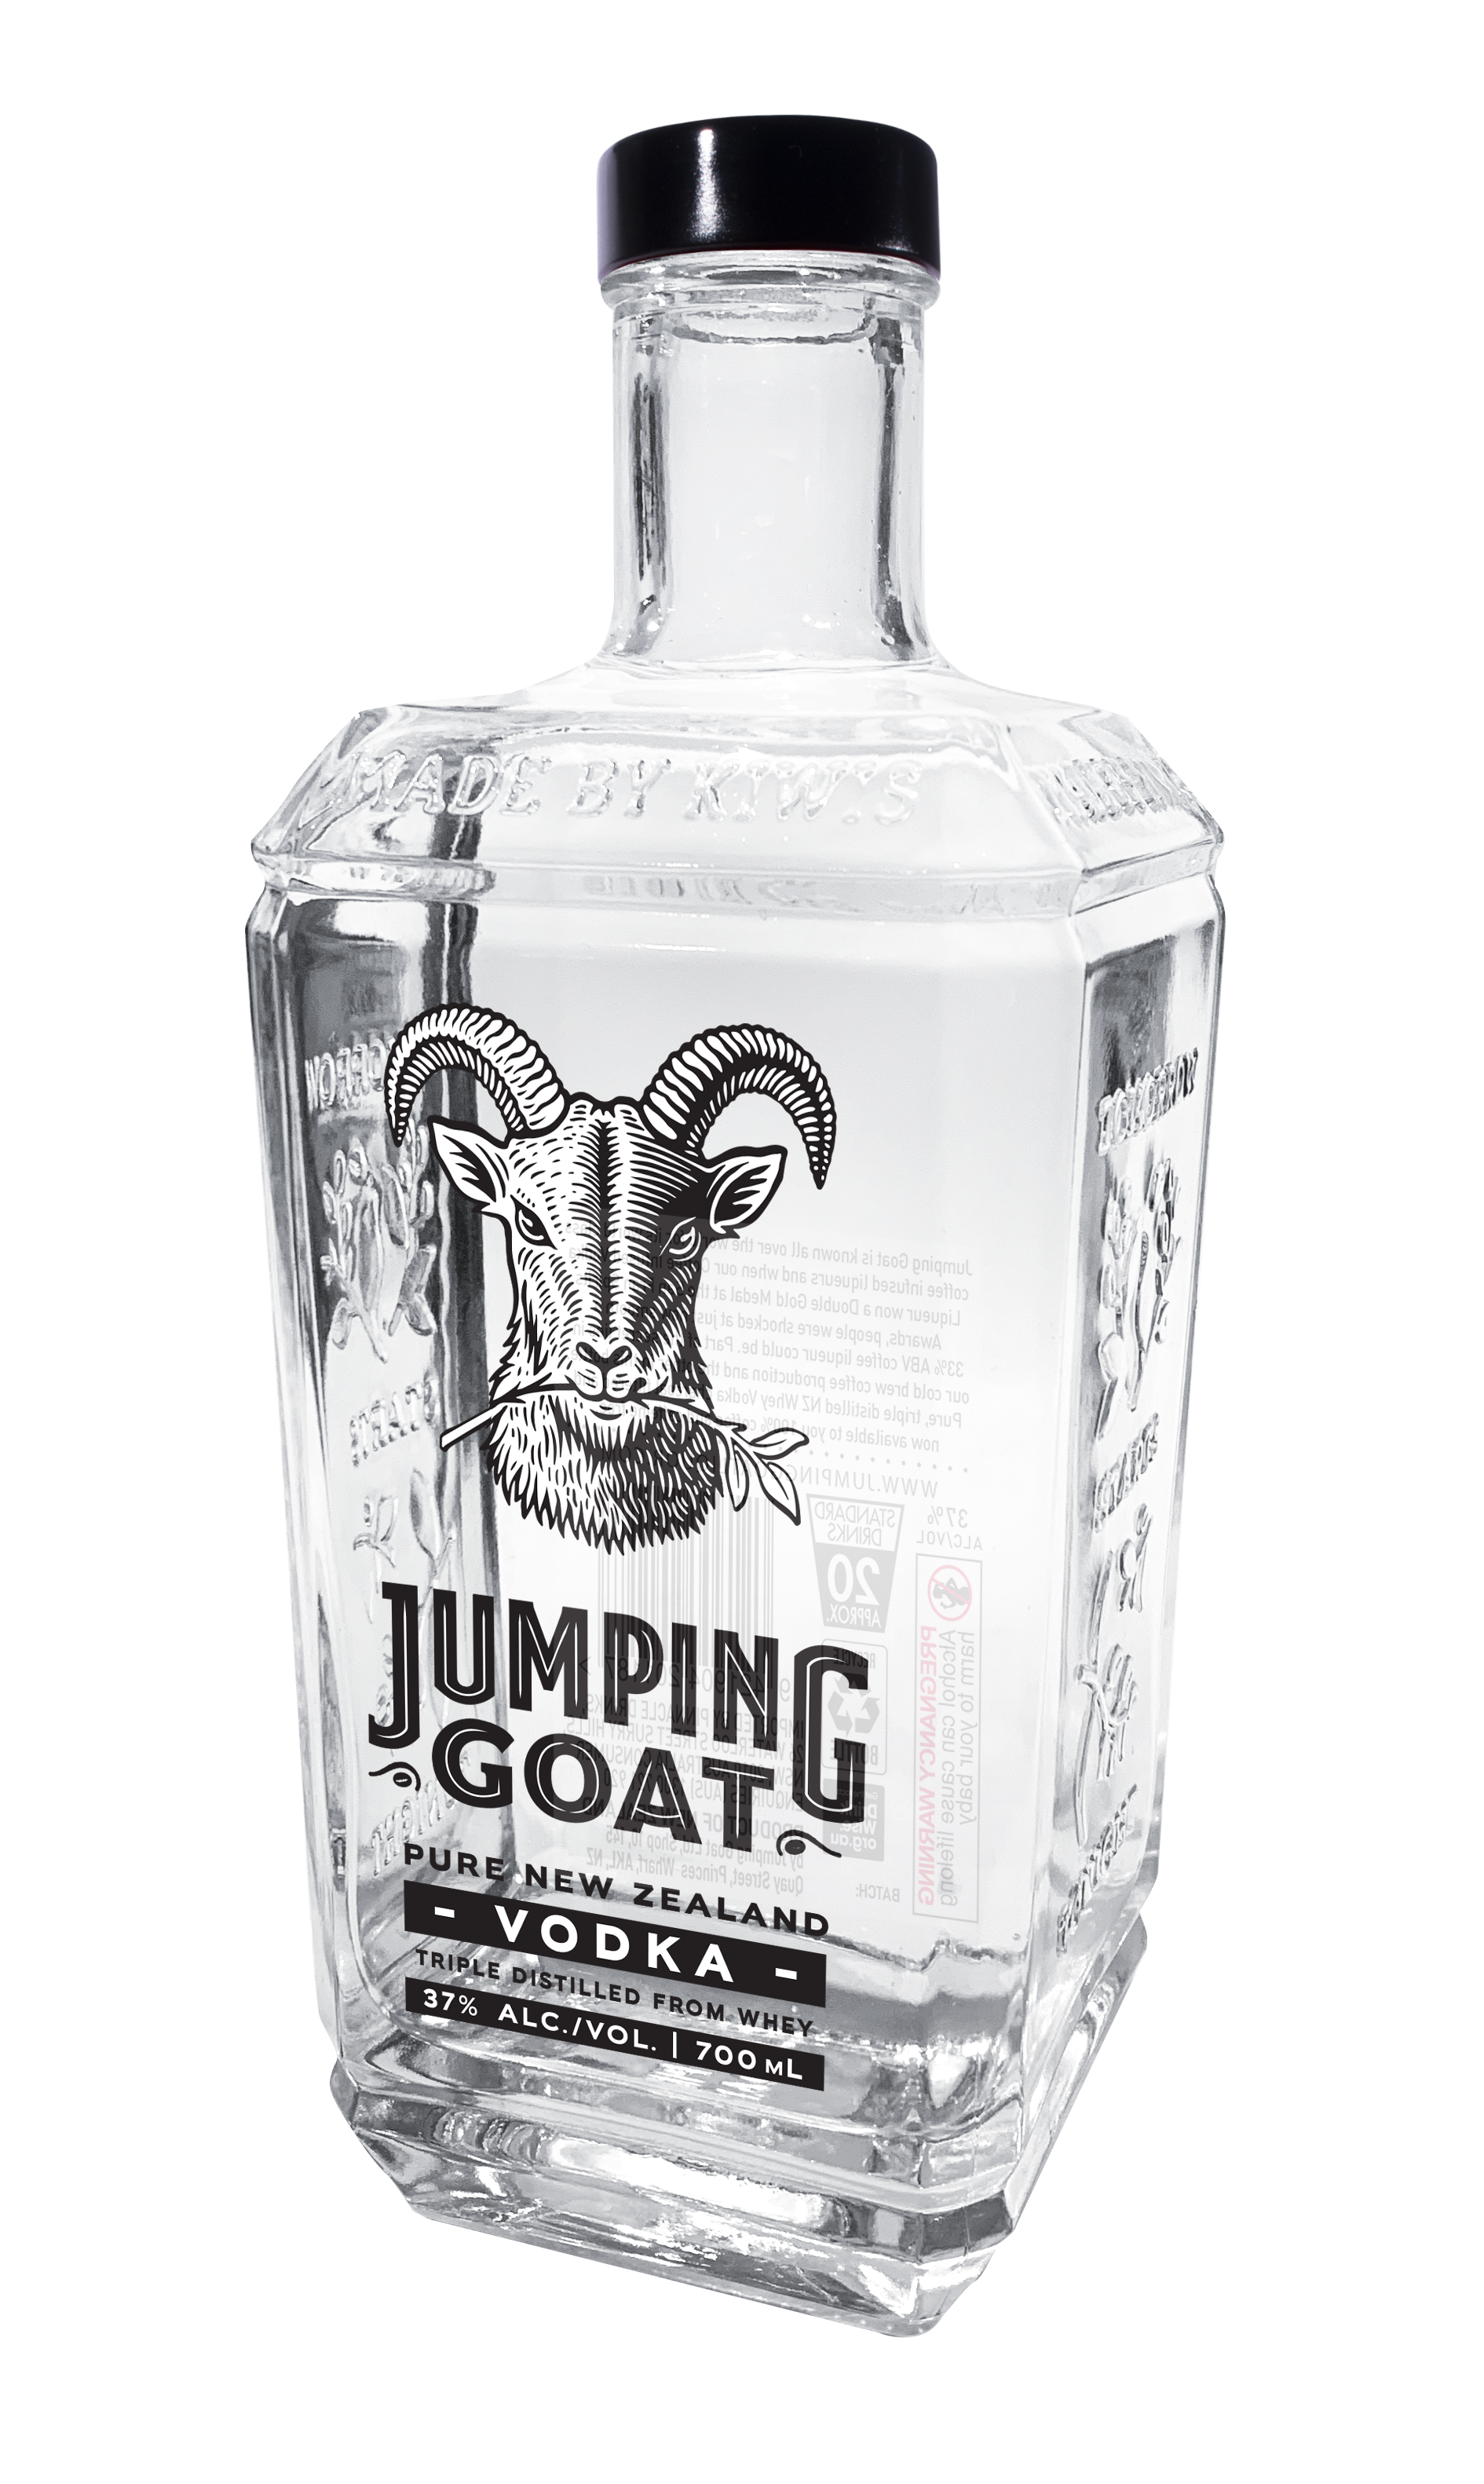 Jumping Goat Pure New Zealand Vodka